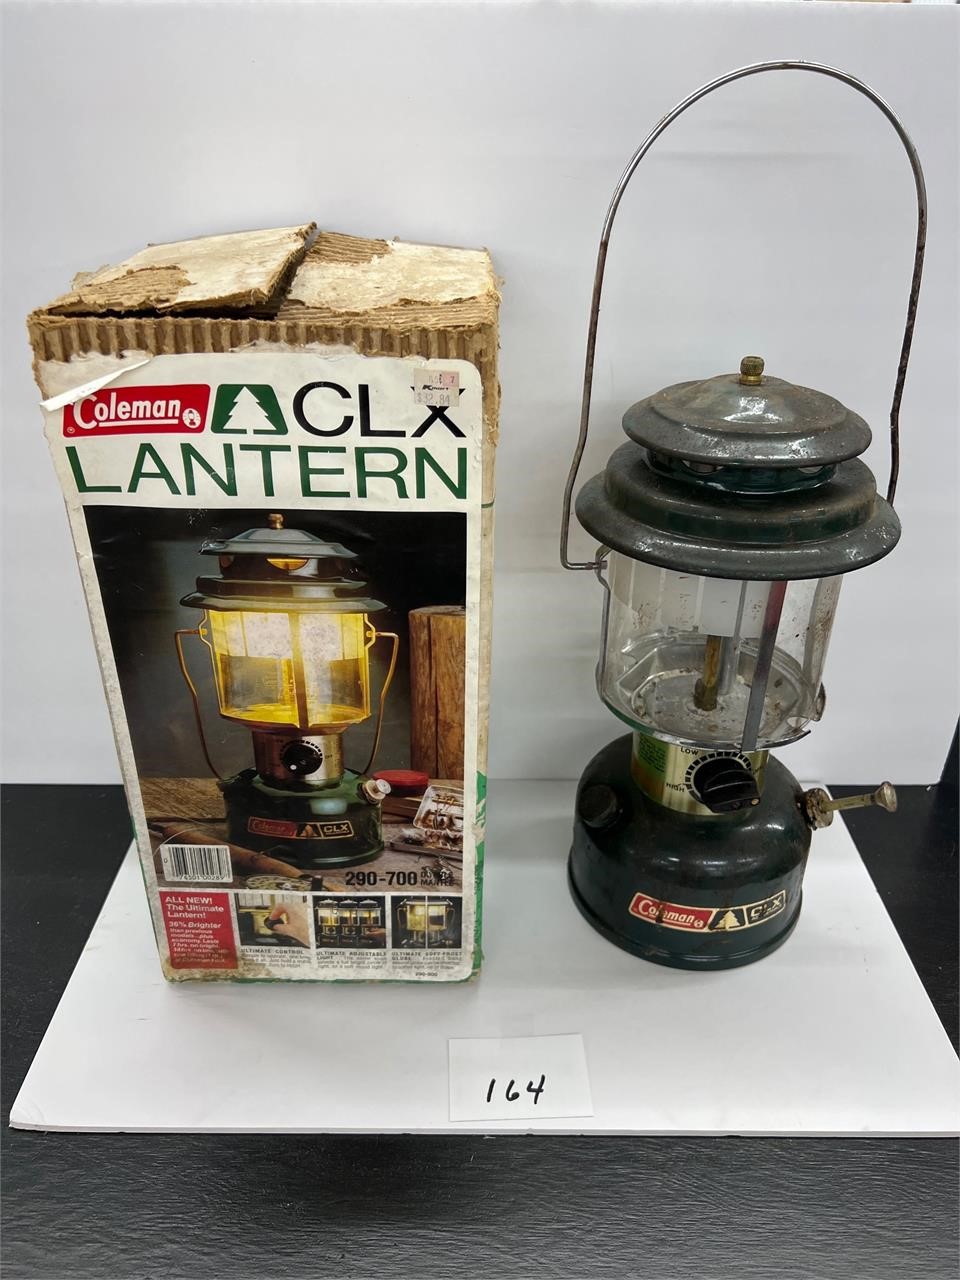 Coleman camp lantern w/ box